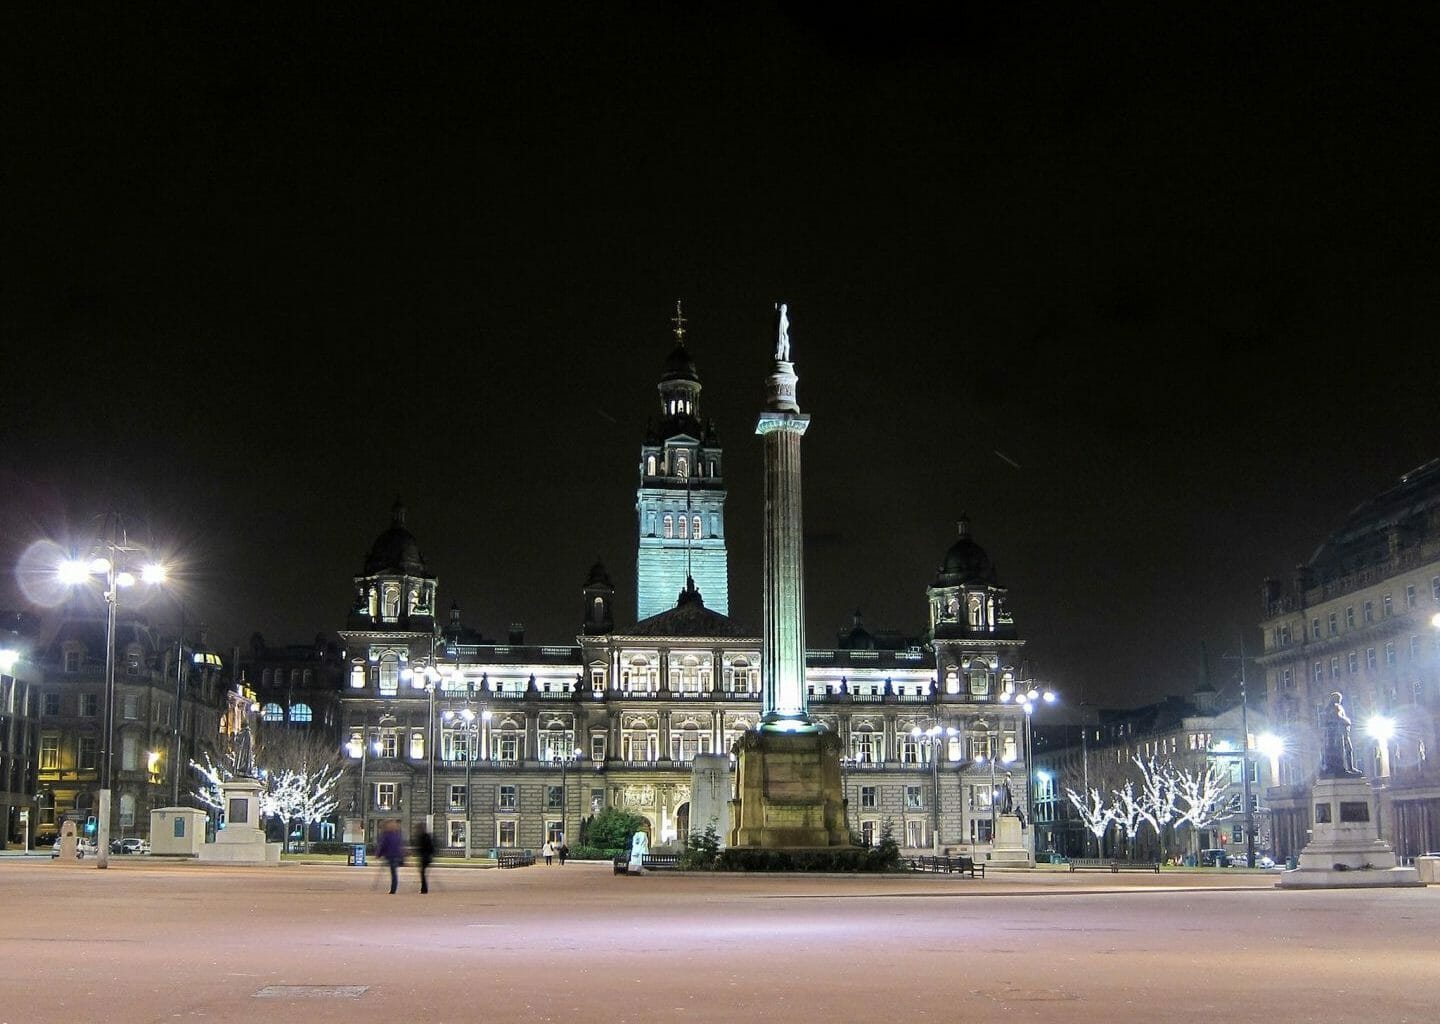 Glasgow City Chambers | By Velvet | CC BY-SA 3.0 via Wikimedia Commons | http://bit.ly/1GIpdI0